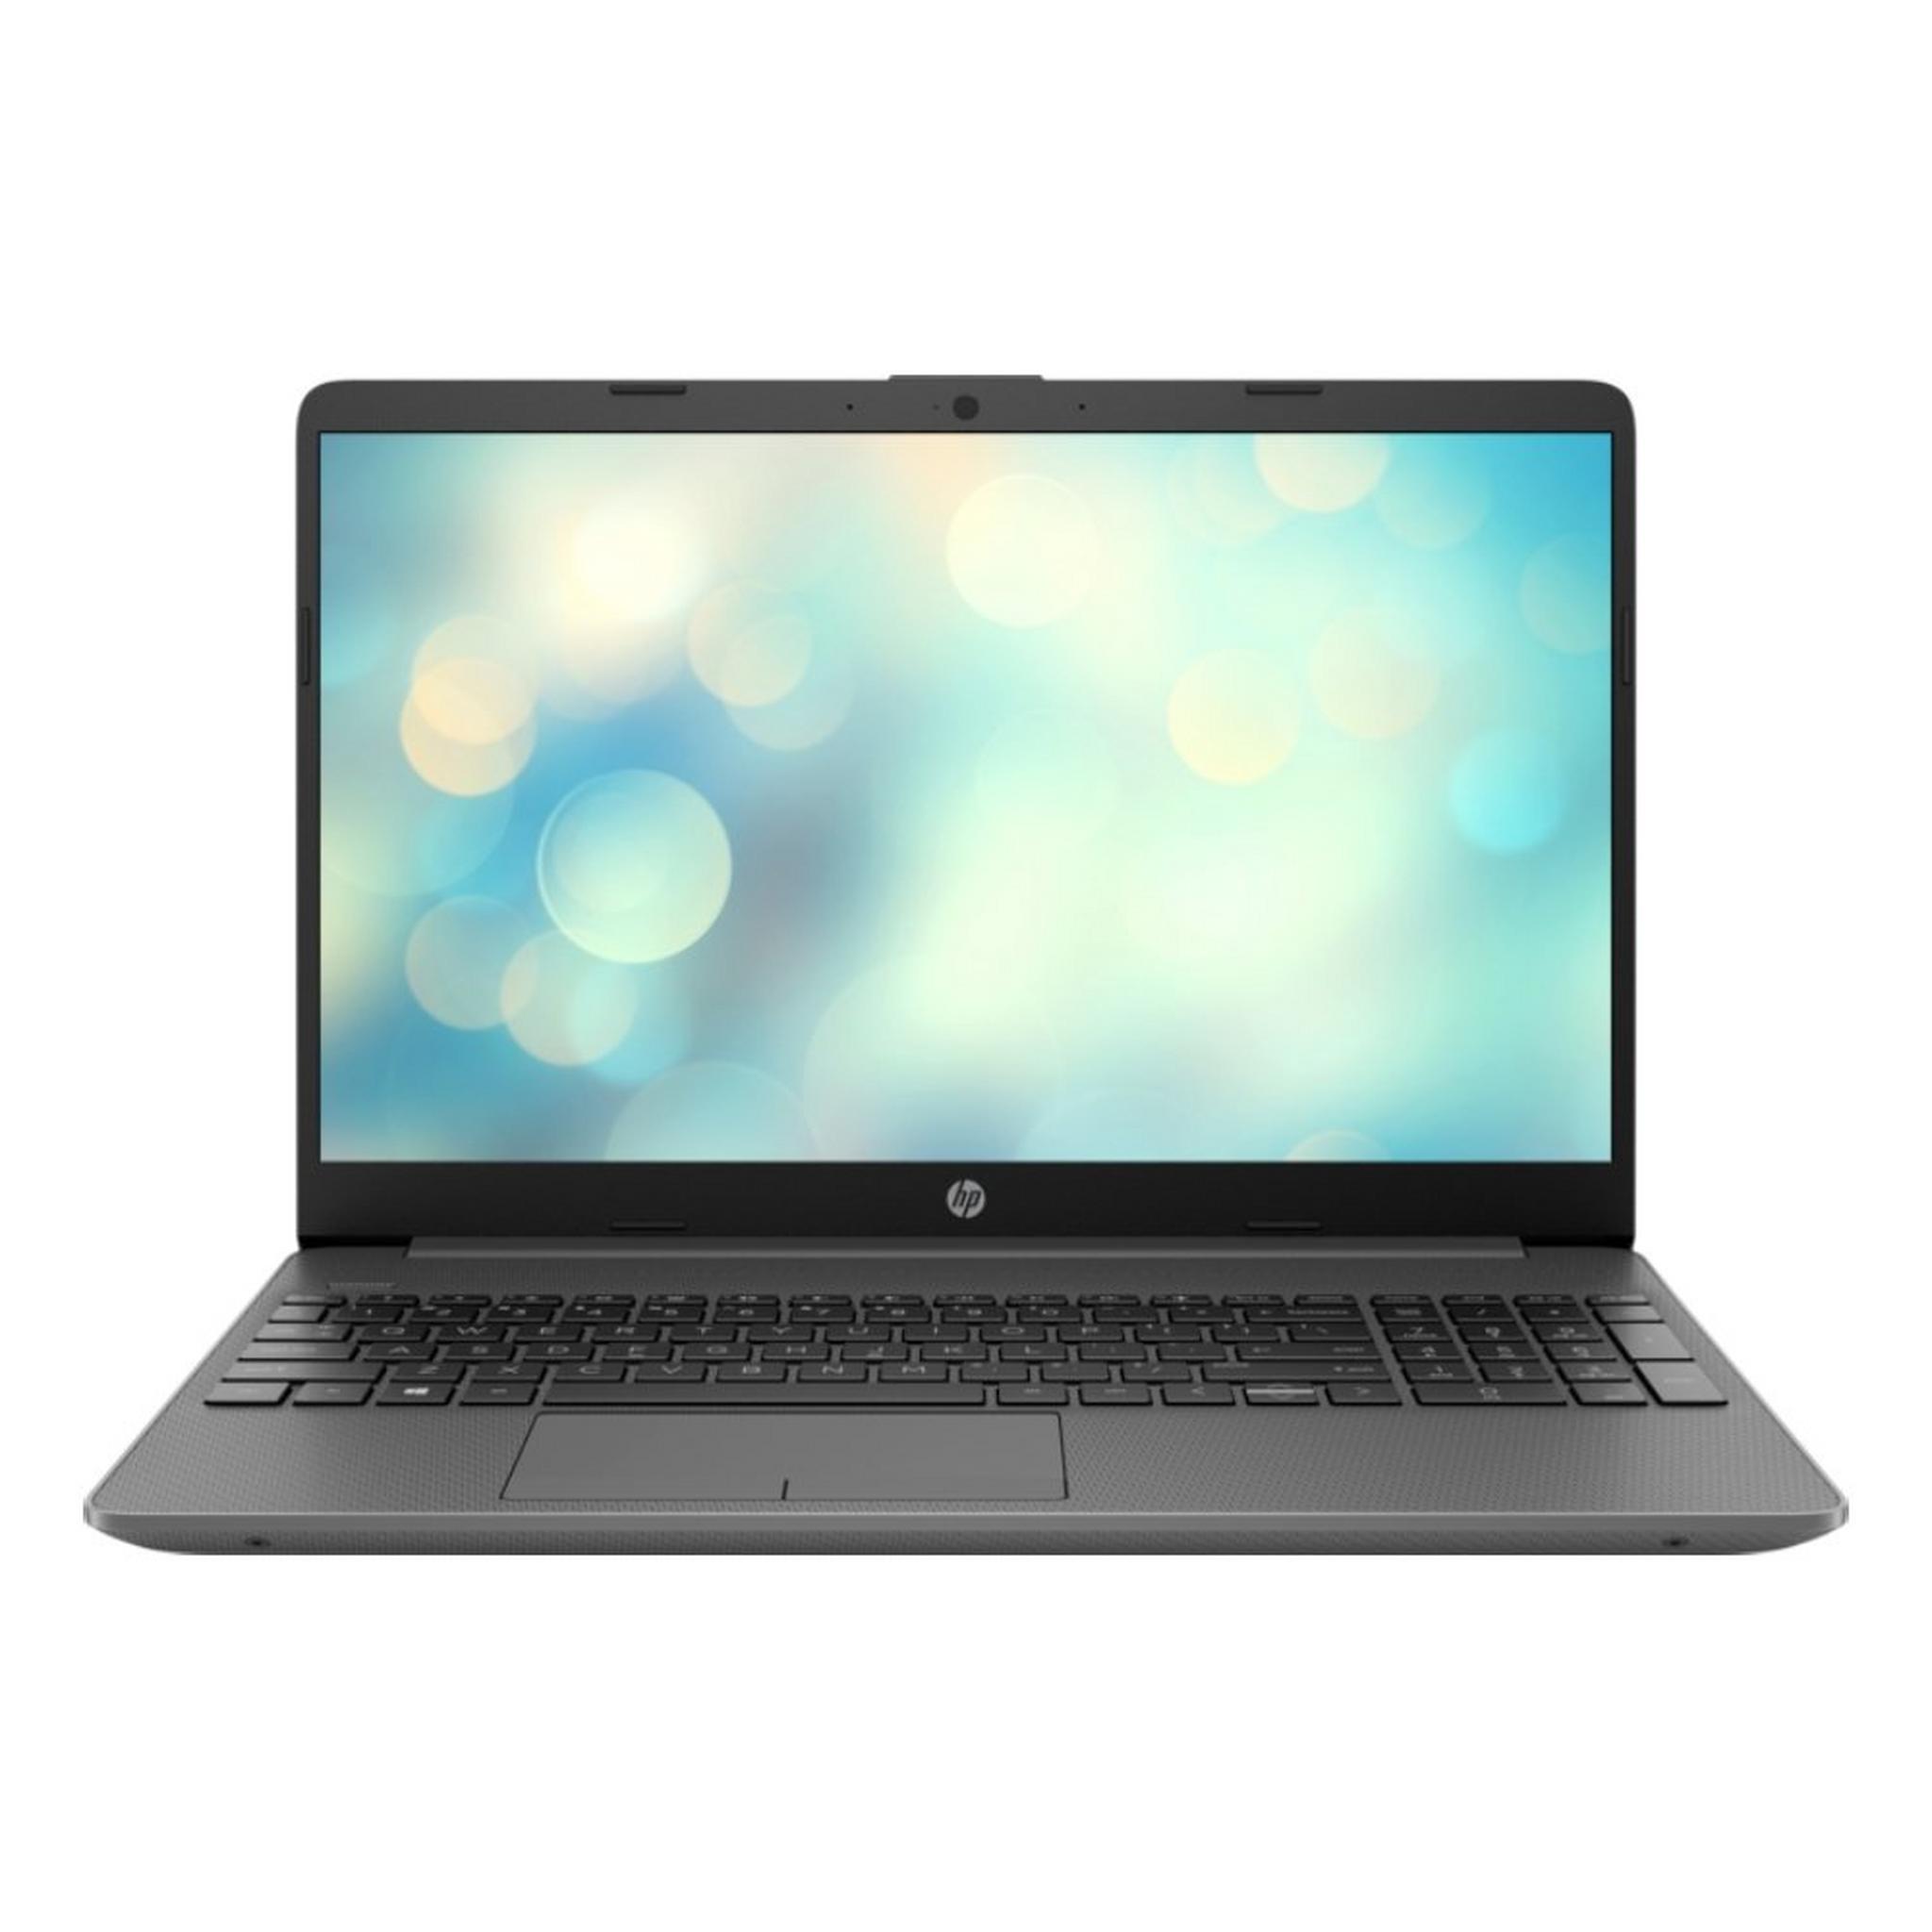 HP 15 Intel Core i7, 8GB RAM, 1TB HDD + 256GB SSD, 15.6-inch Laptop - Grey